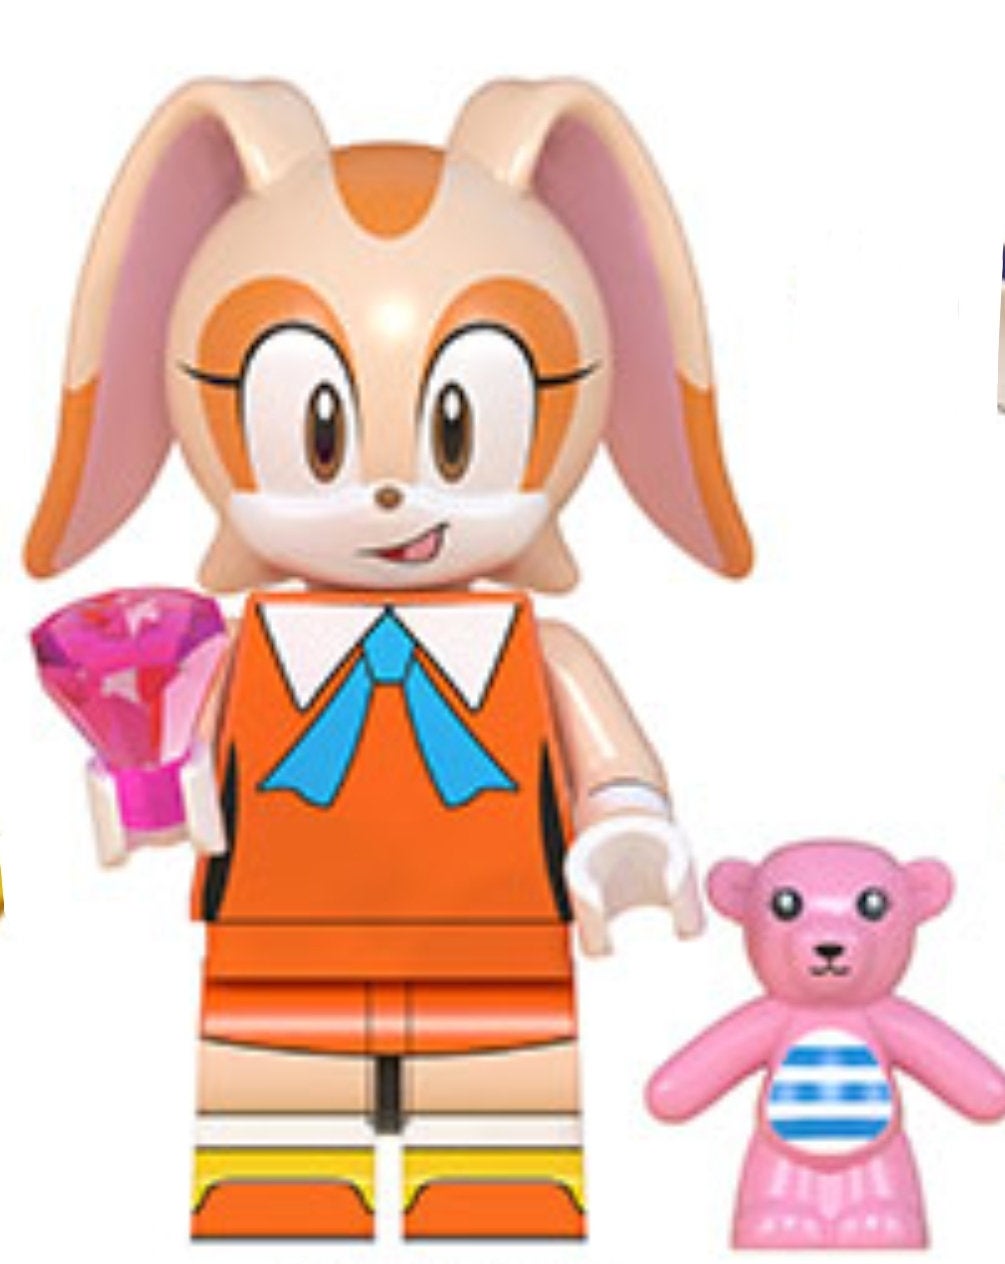 Rabbit Custom minifigure by Beaus Bricks.   Brand new in package.  Please visit shop, lots more!